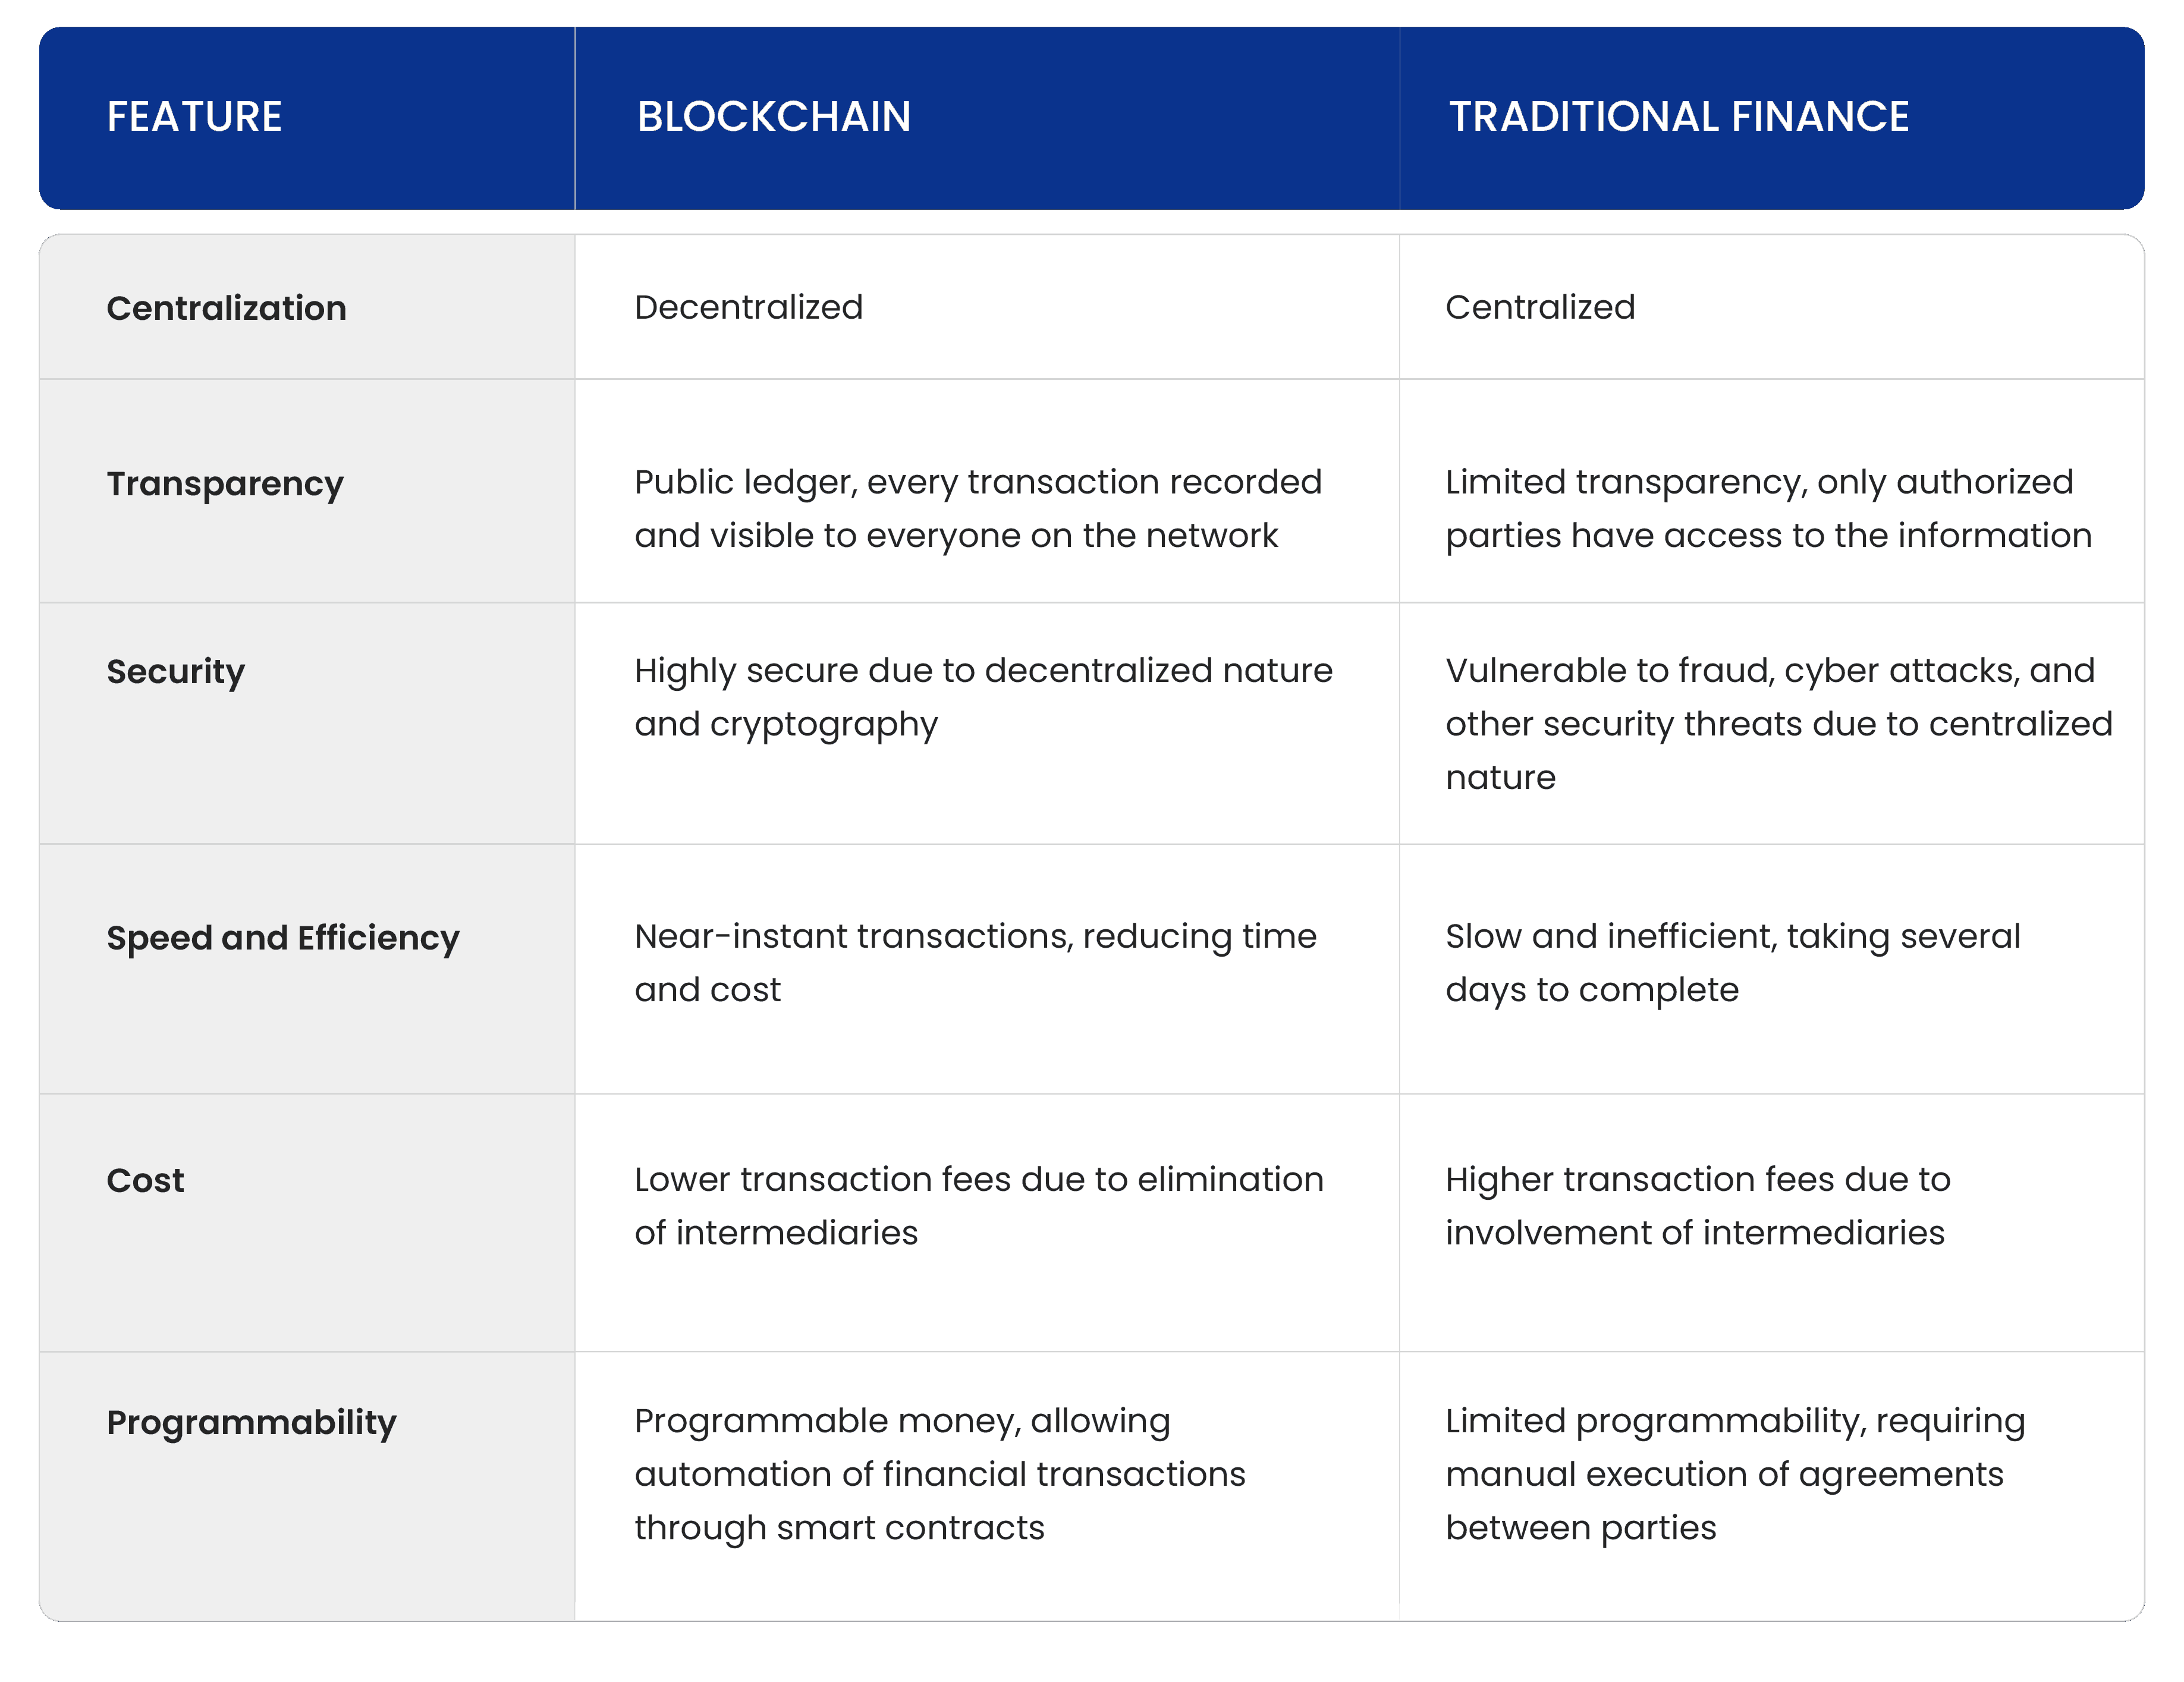 Comparison of Blockchain over Traditional Finance